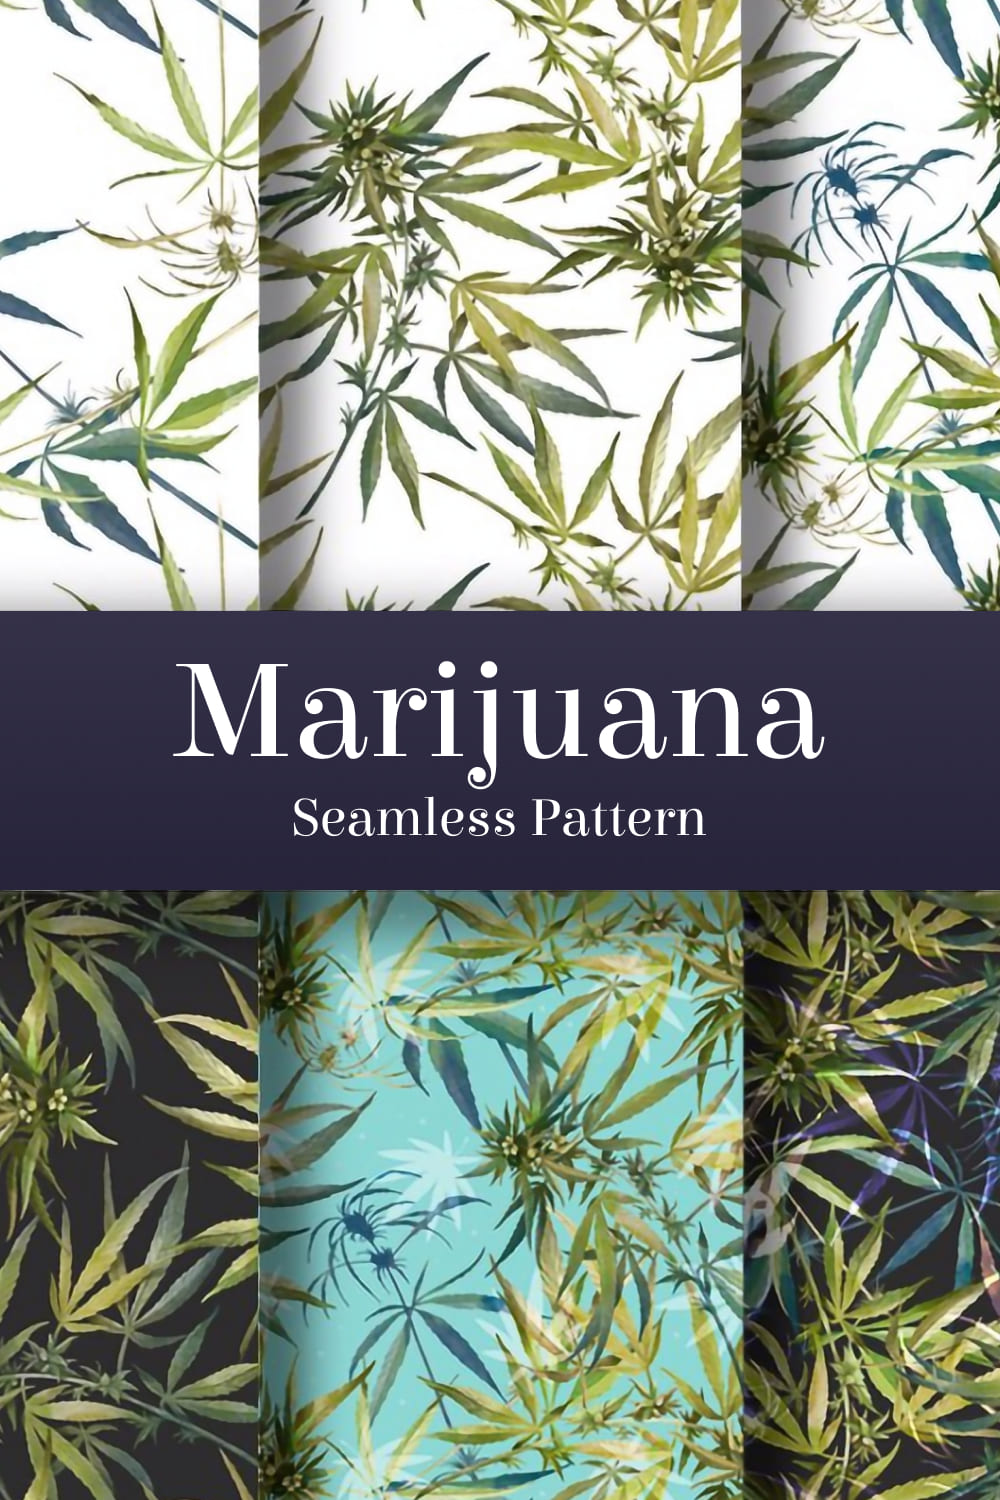 Marijuana seamless pattern - pinterest image preview.